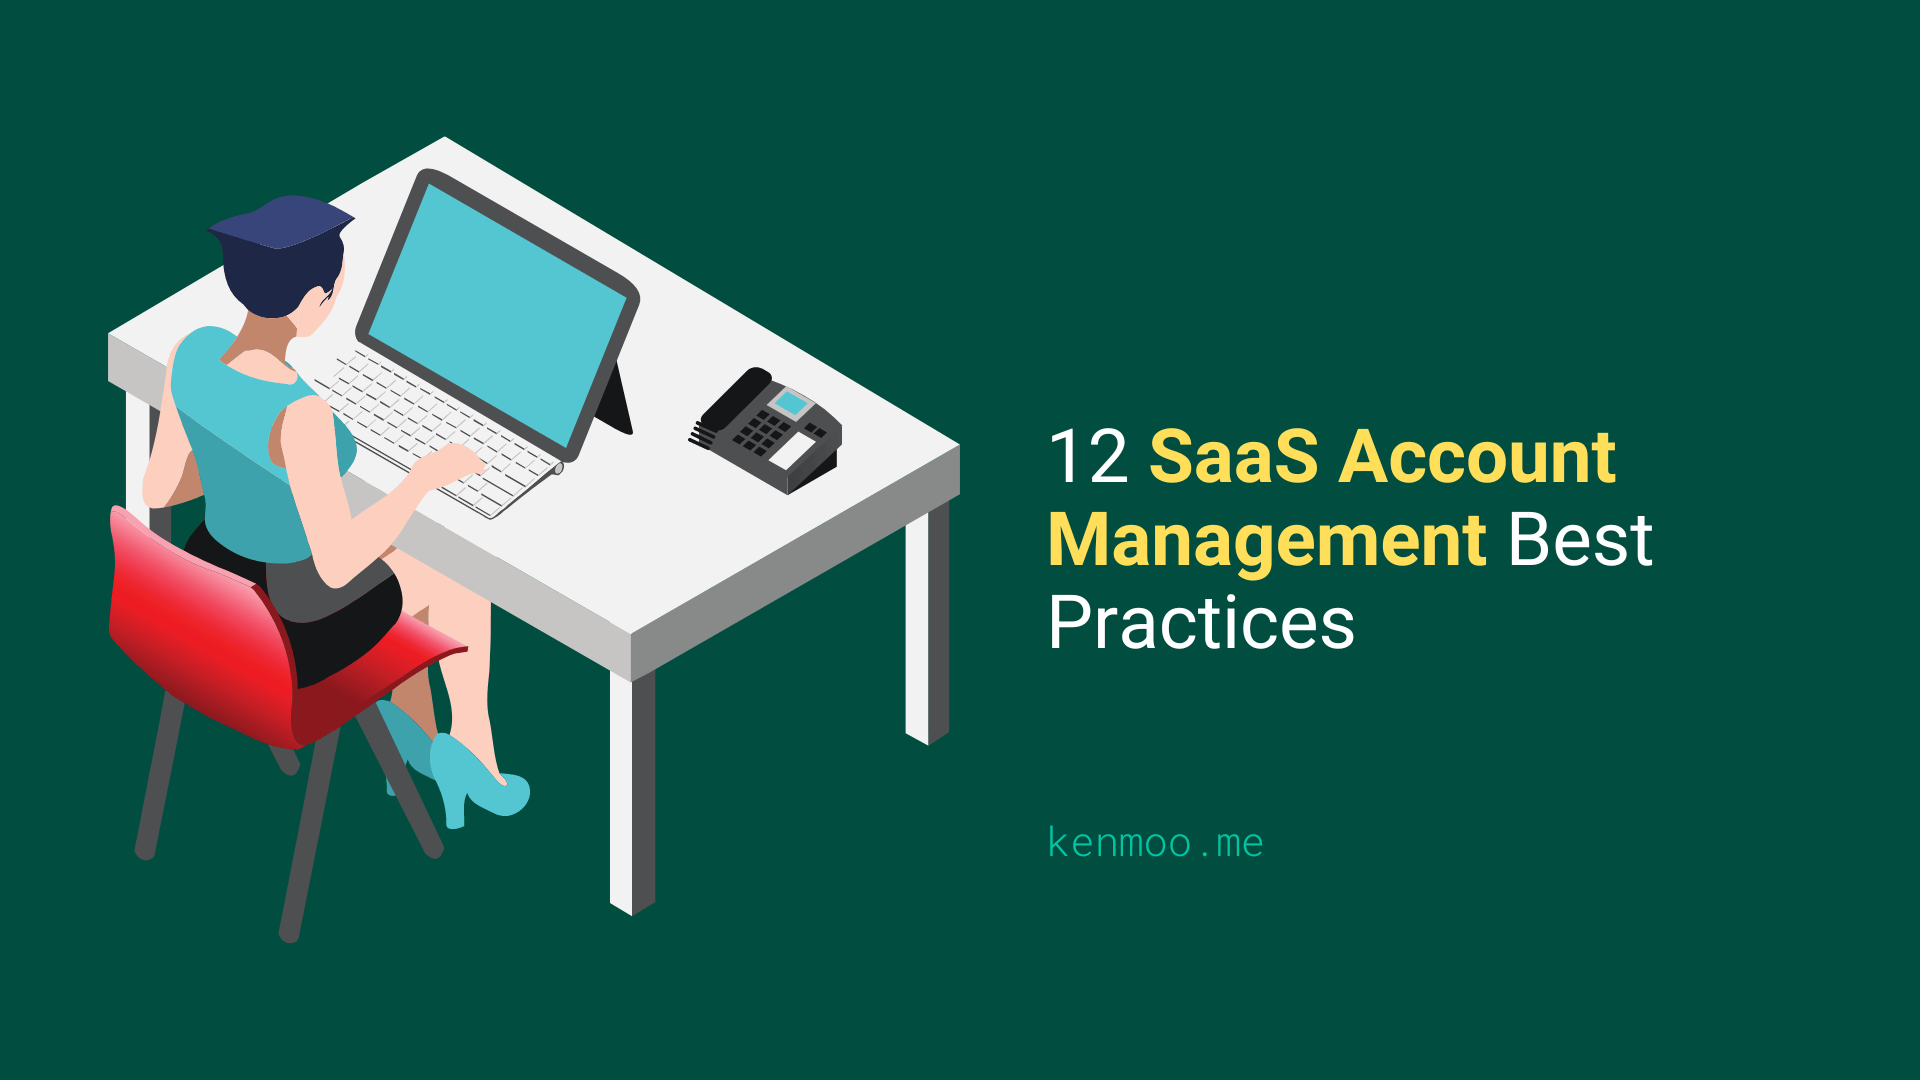 12 SaaS Account Management Best Practices